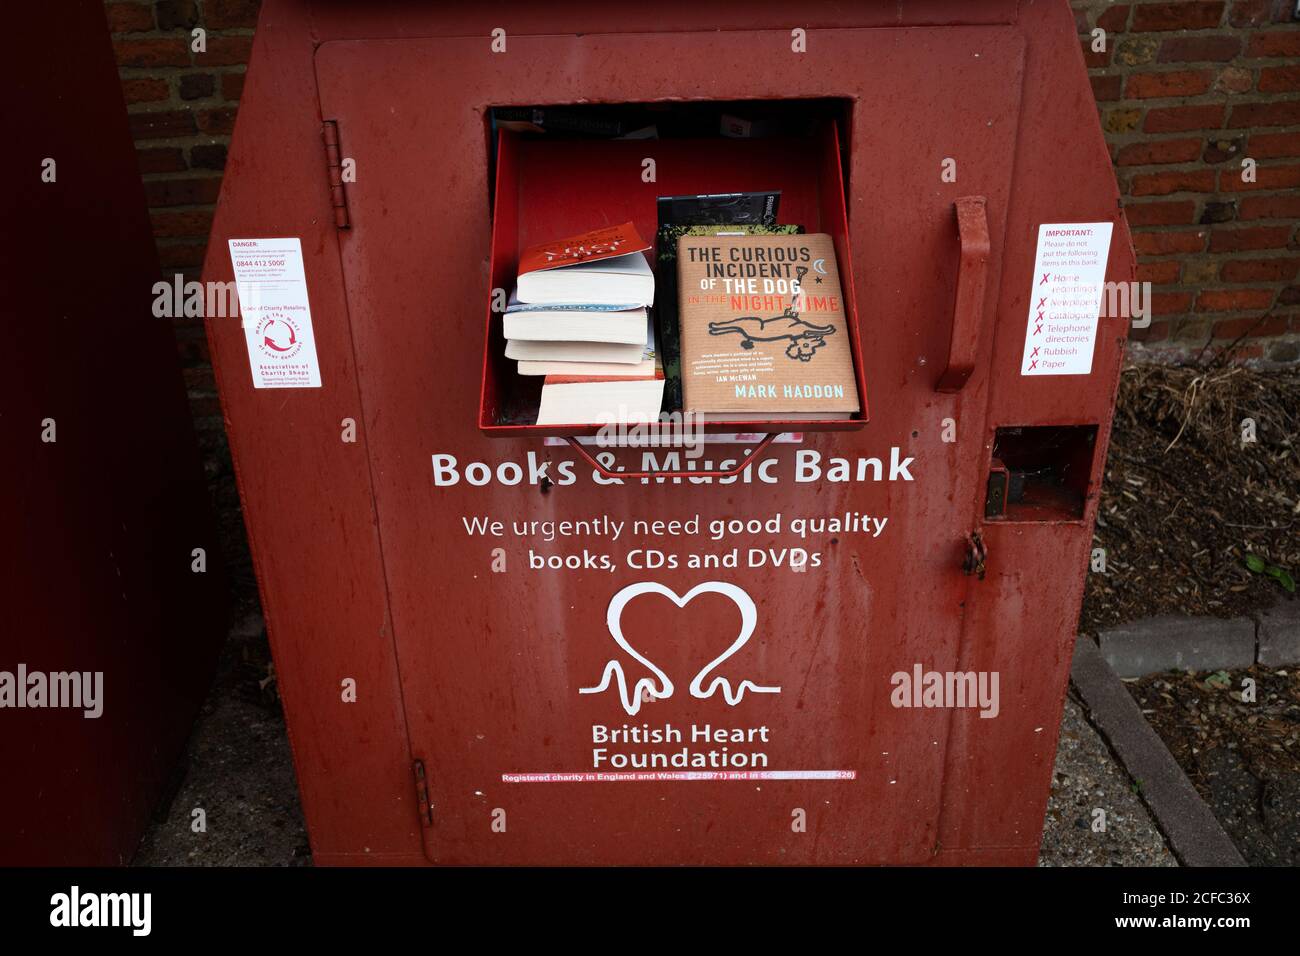 British Heart Foundation books and music bank Stock Photo